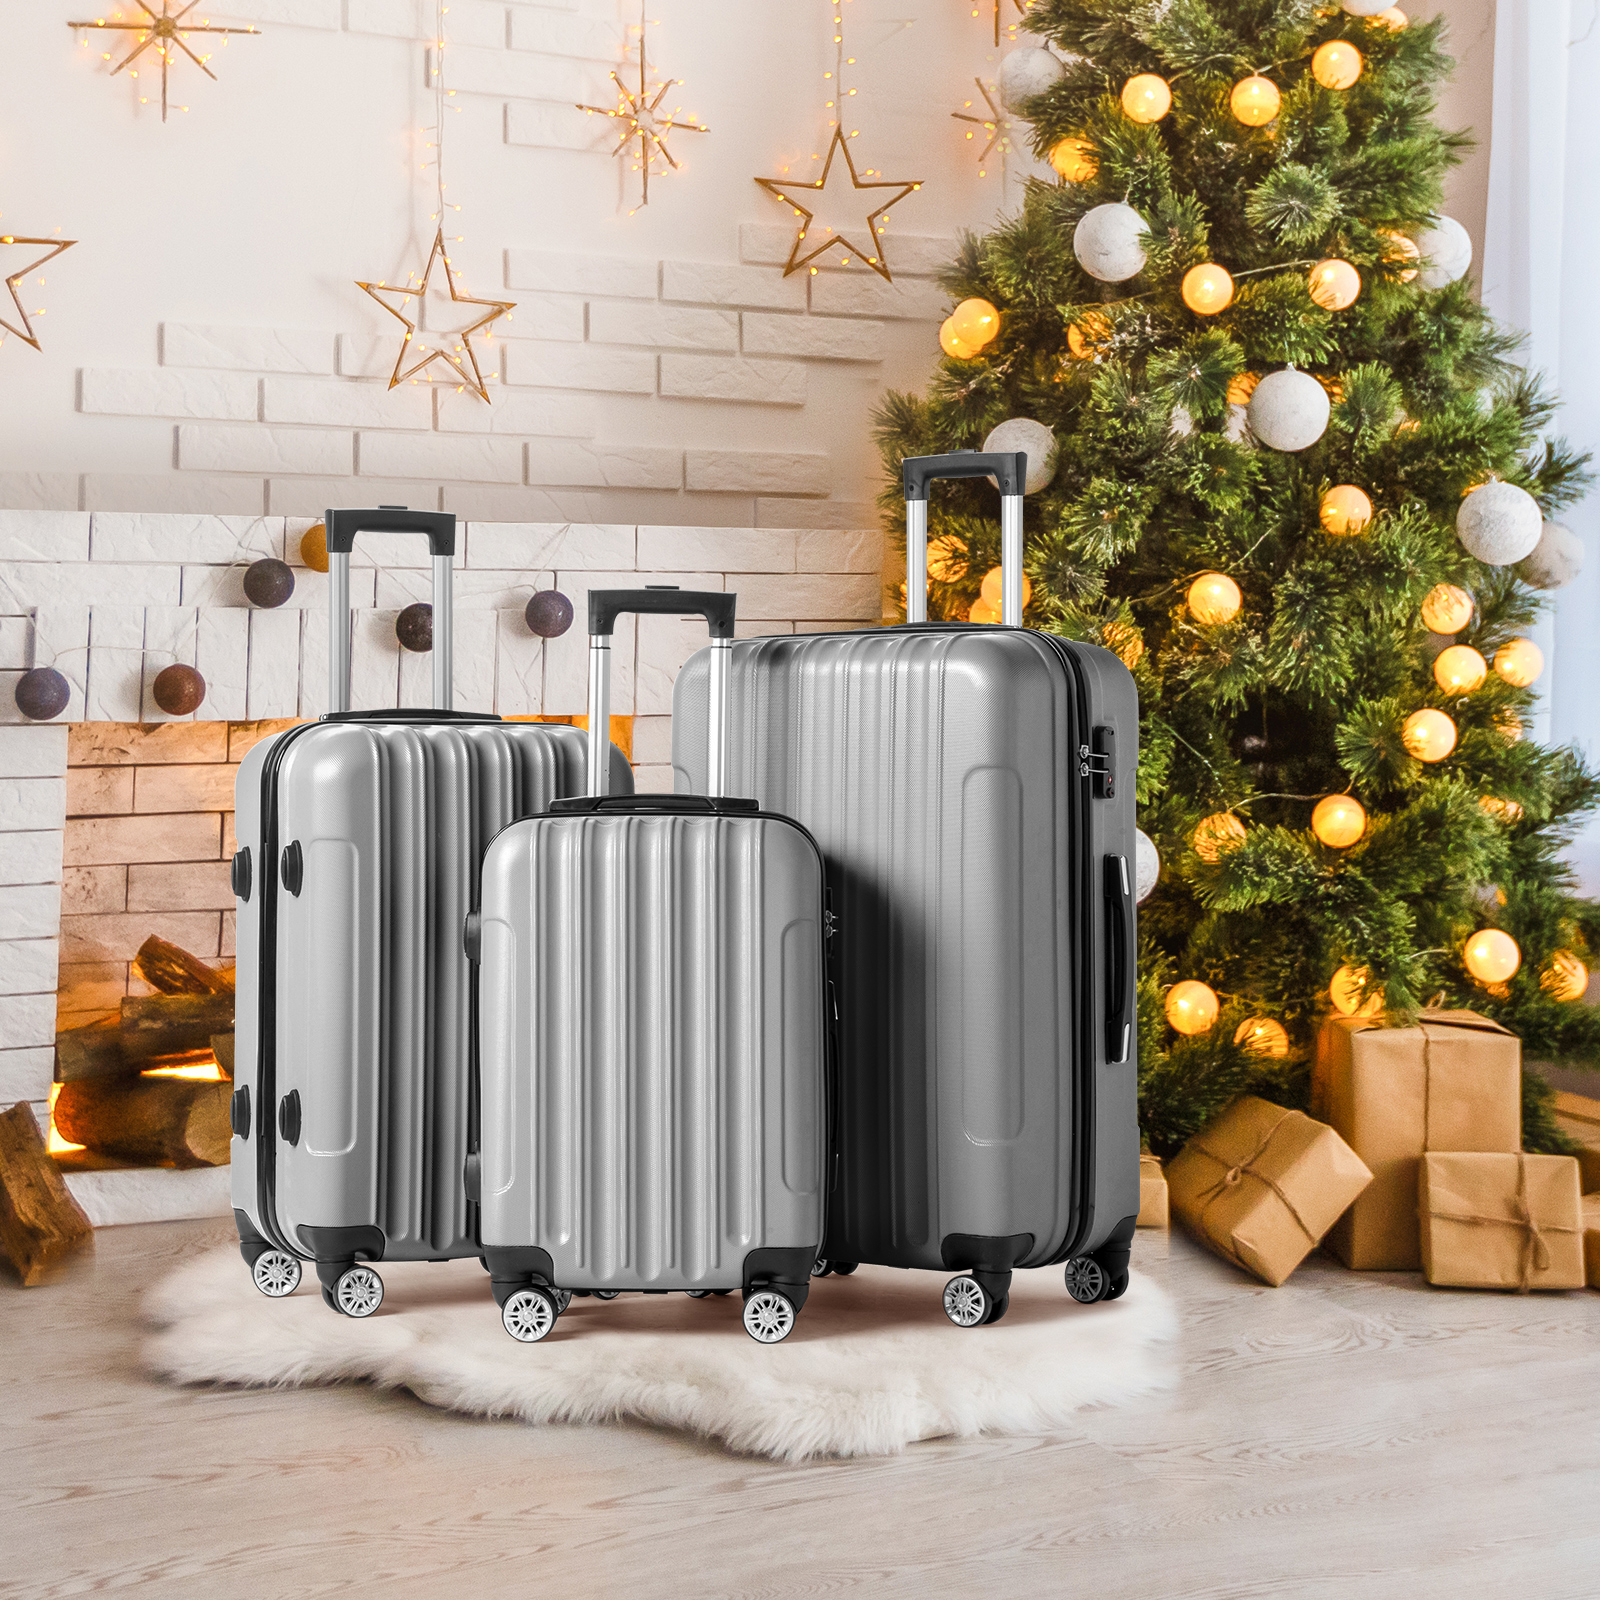 Zimtown 3 Piece Nested Spinner Suitcase Luggage Set With TSA Lock Gray - image 2 of 13